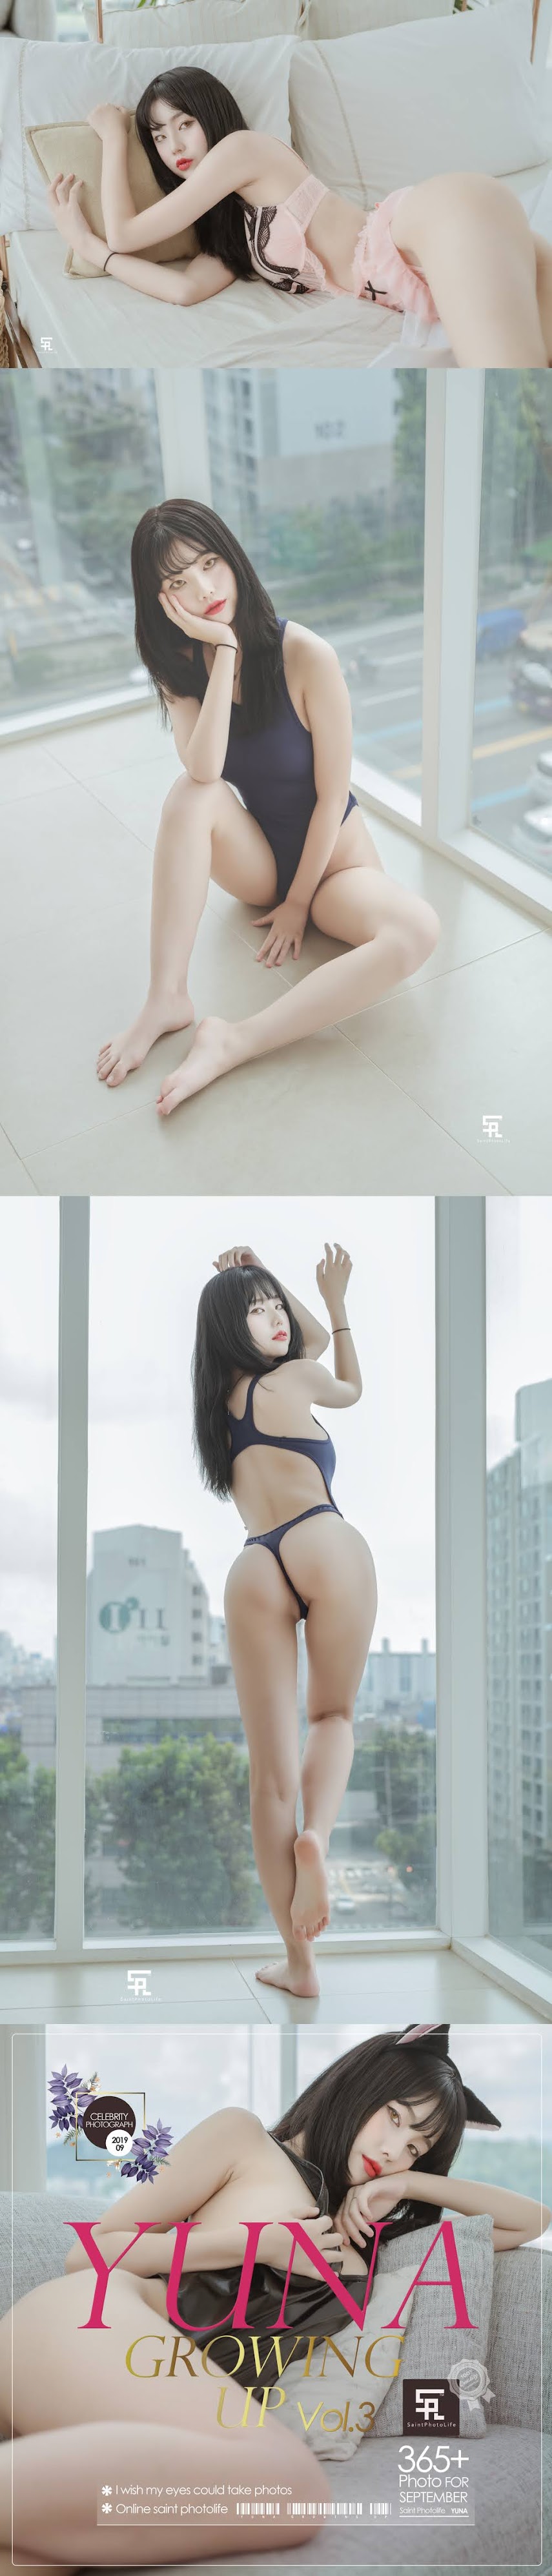 [Saint Photo Life] Growing up Vol.3 - Yuna   P214312 - idols